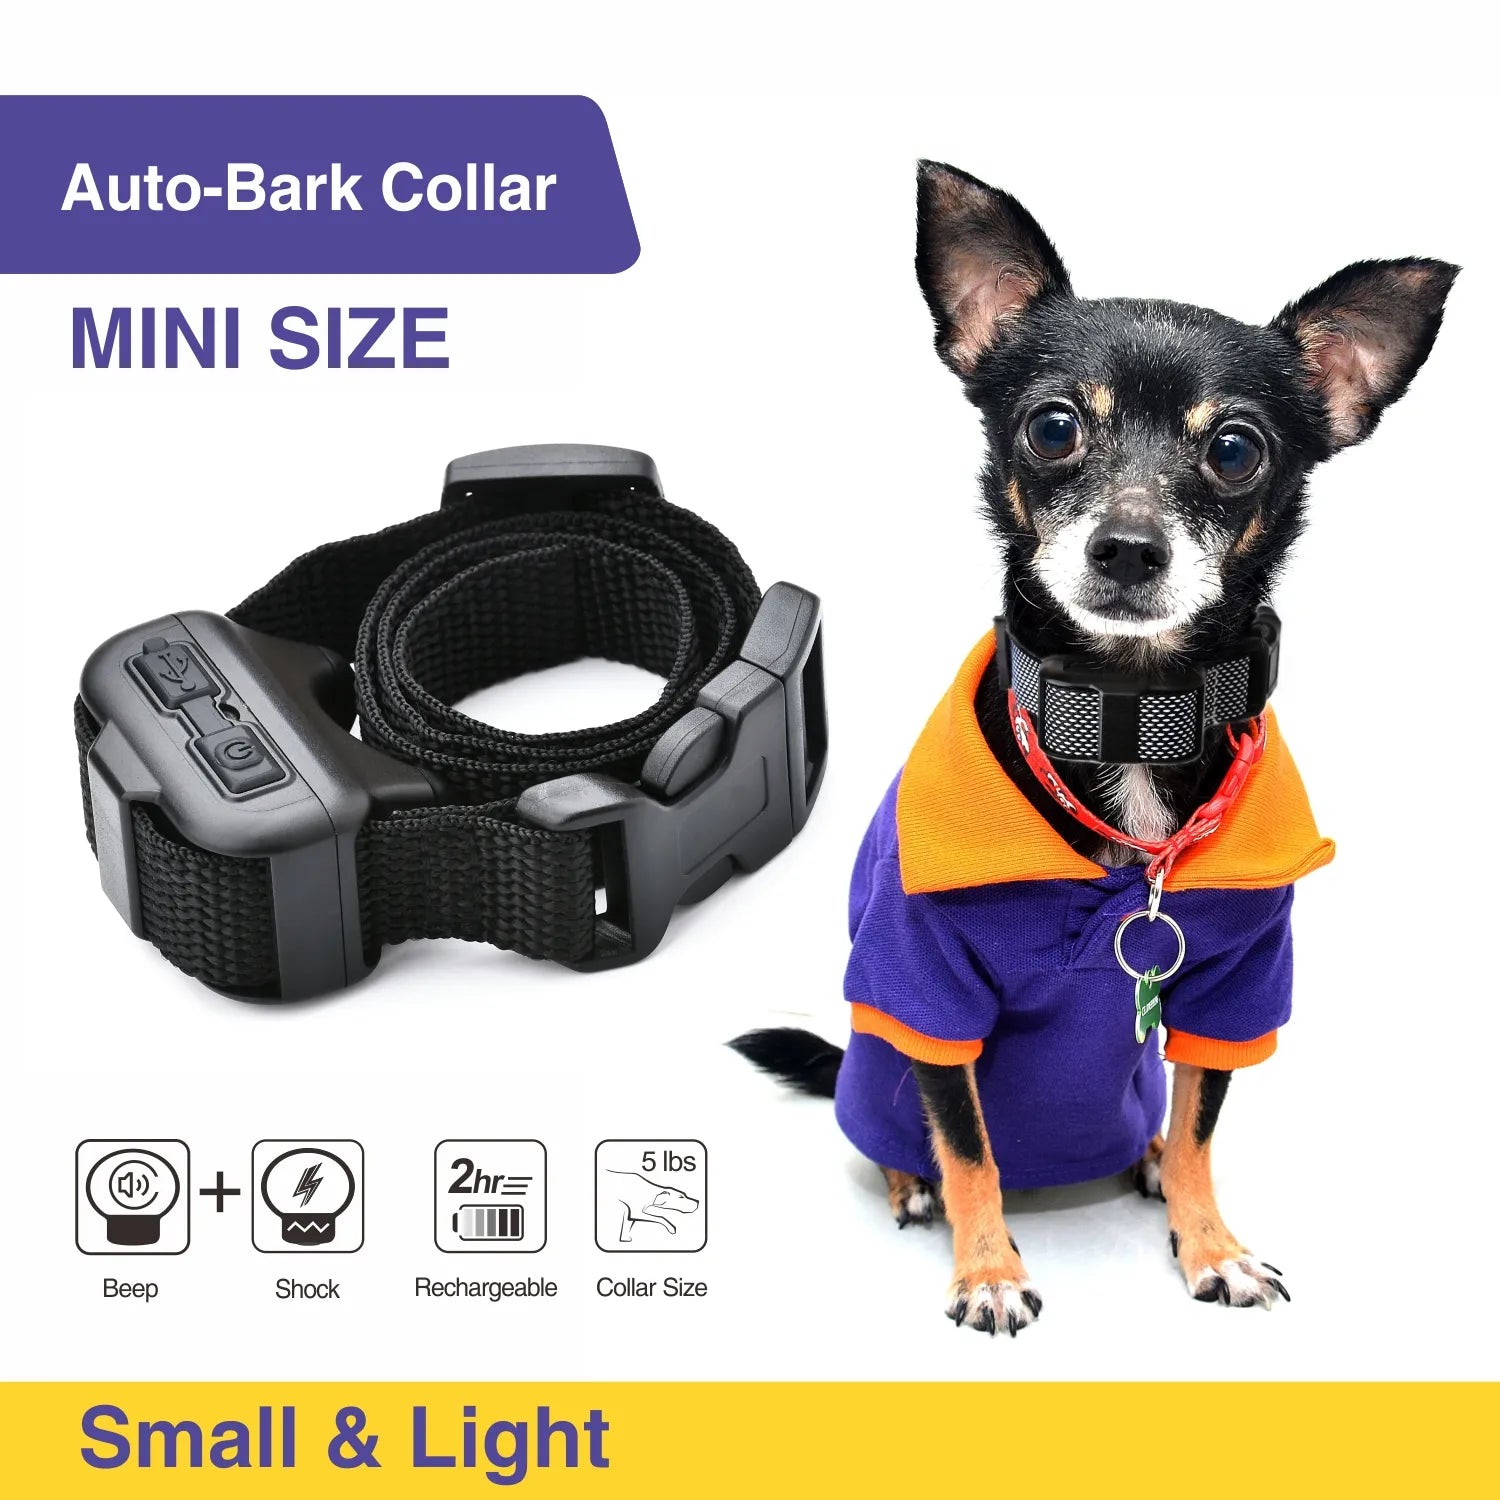 Small Dog Bark Collar with Beep & Shock Modes for Training  petlums.com   